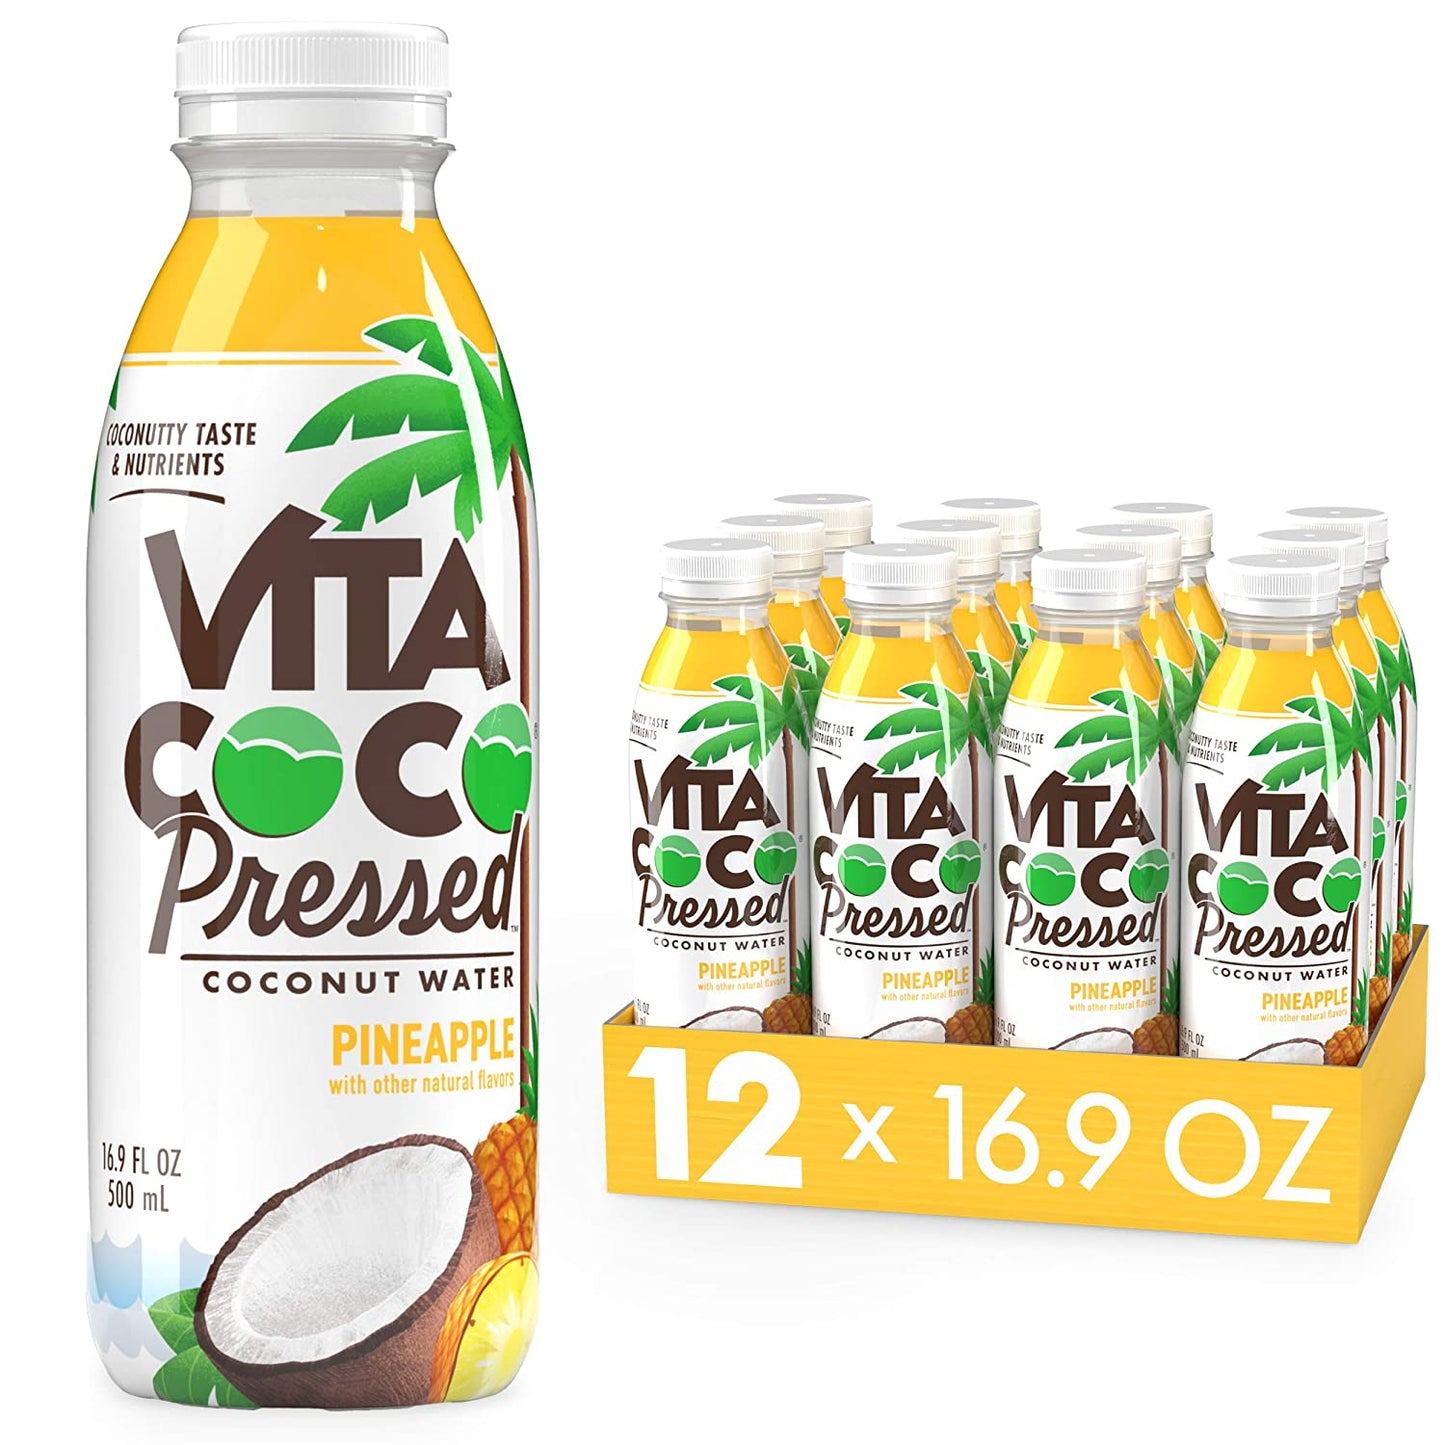 Vita Coco Pressed Coconut Water Pineapple, 16.9oz Slim Bottle